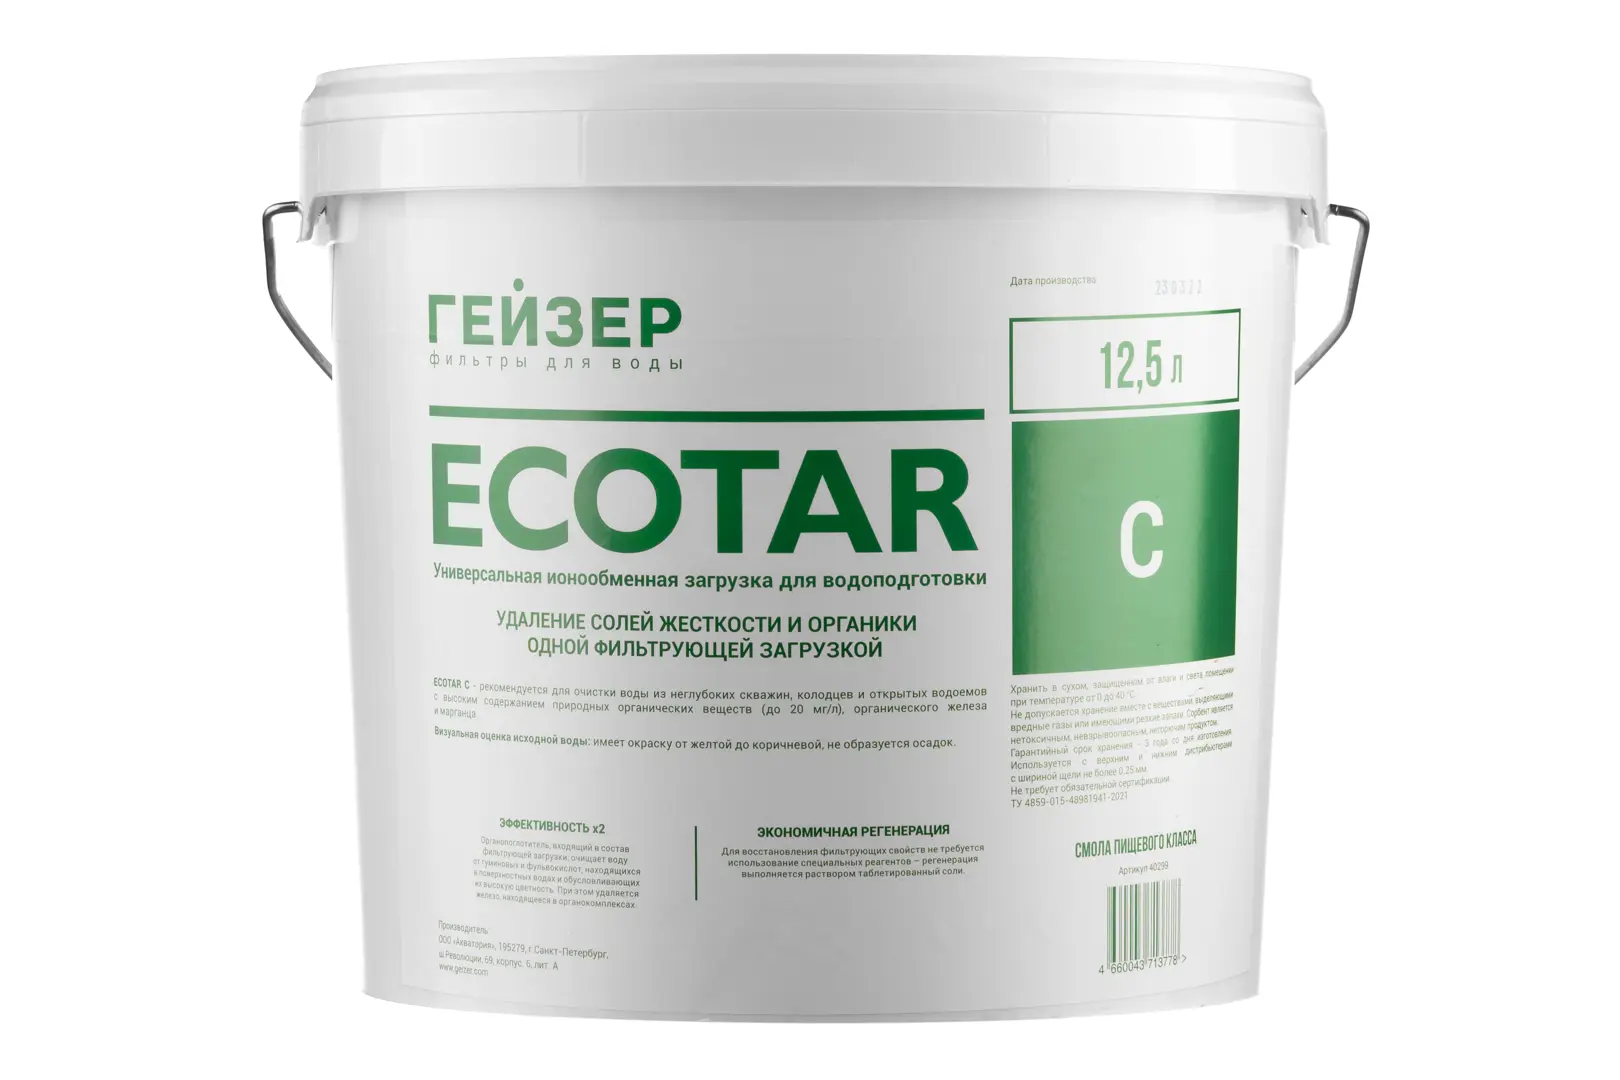 Засыпка Ecotar С для Гейзер ведро 12.5 л сменная засыпка для картриджа гейзер бс 10sl 35753 1 шт